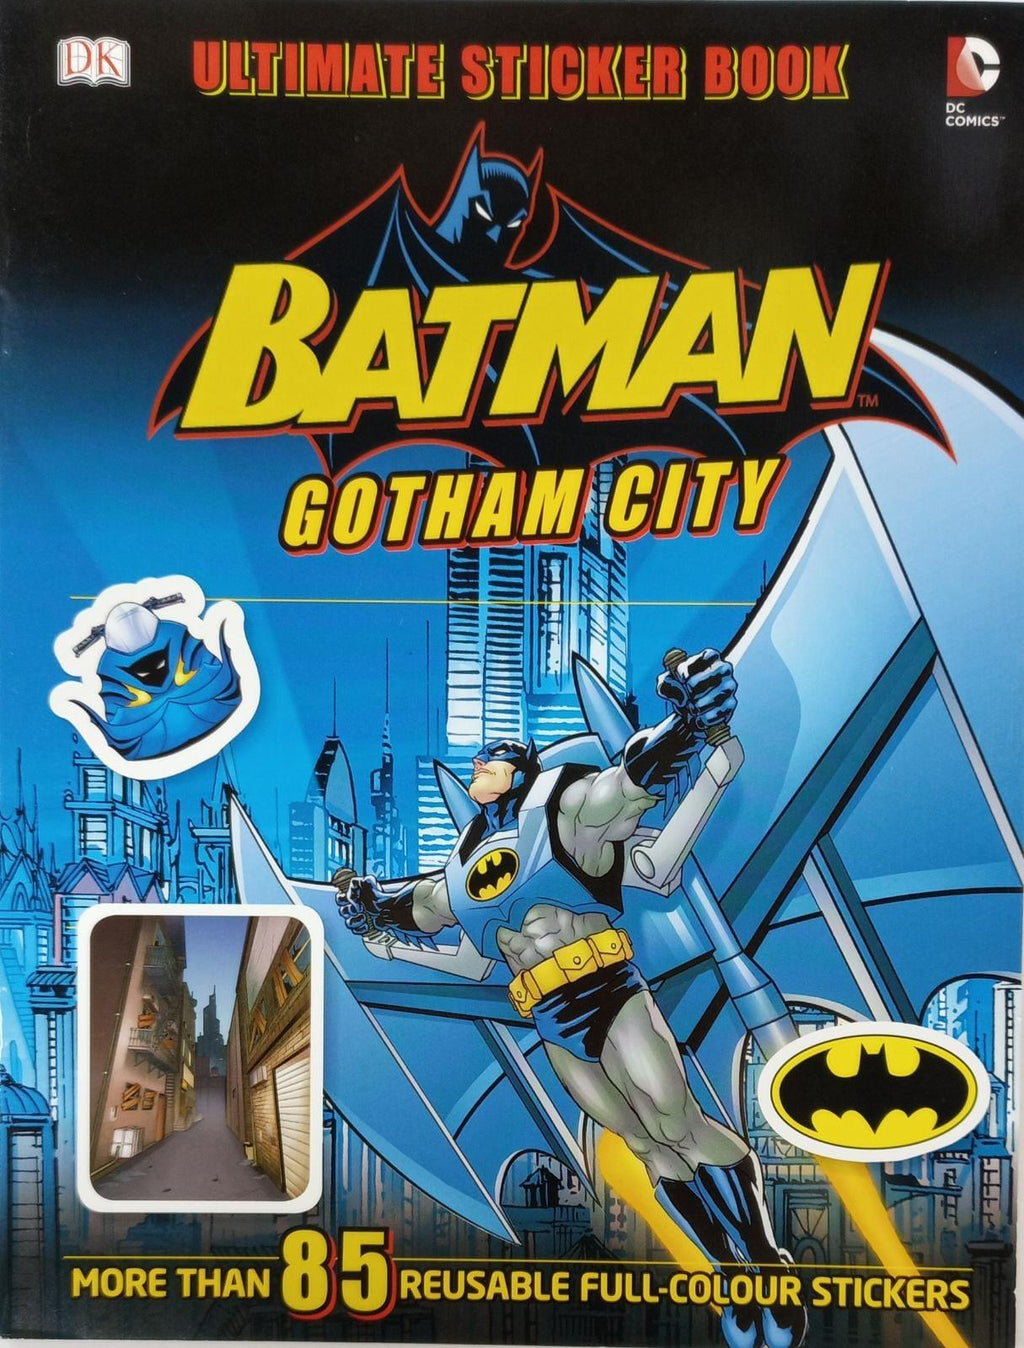 DK Ultimate Sticker Book BATMAN Gothman City DC Comics